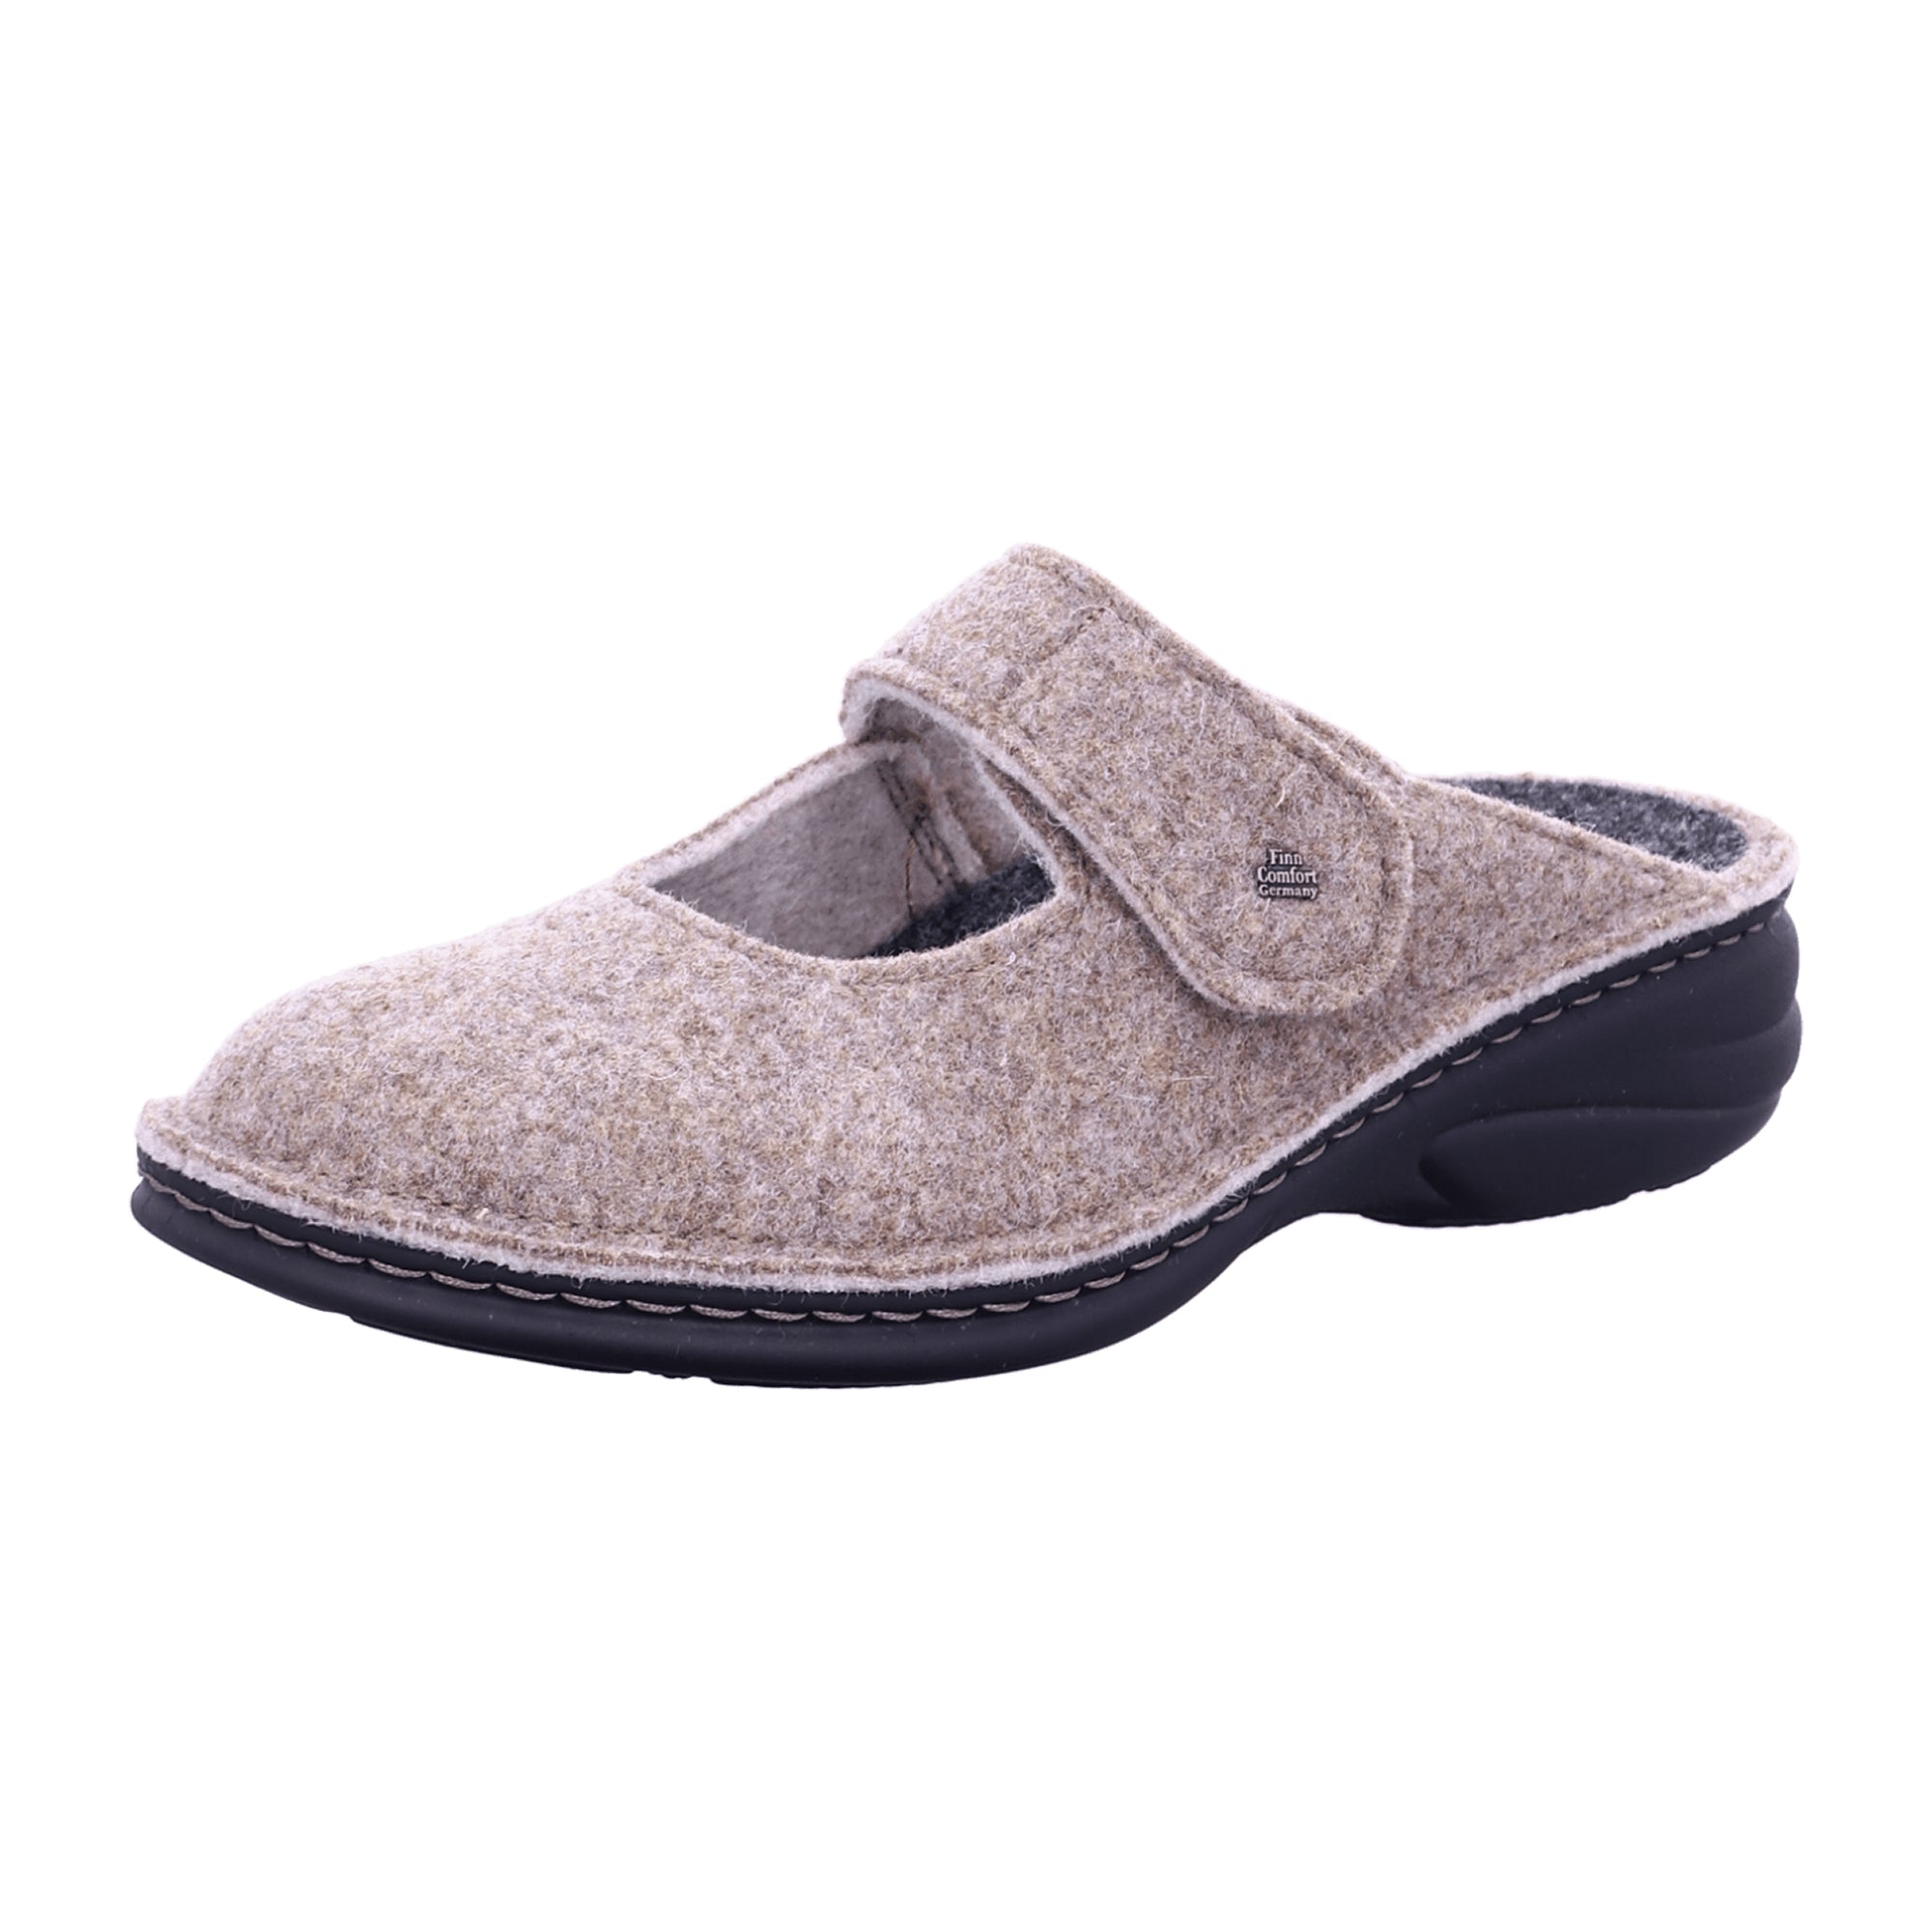 Finn Comfort Glarus Women's Comfort Shoes - Stylish & Durable in Beige